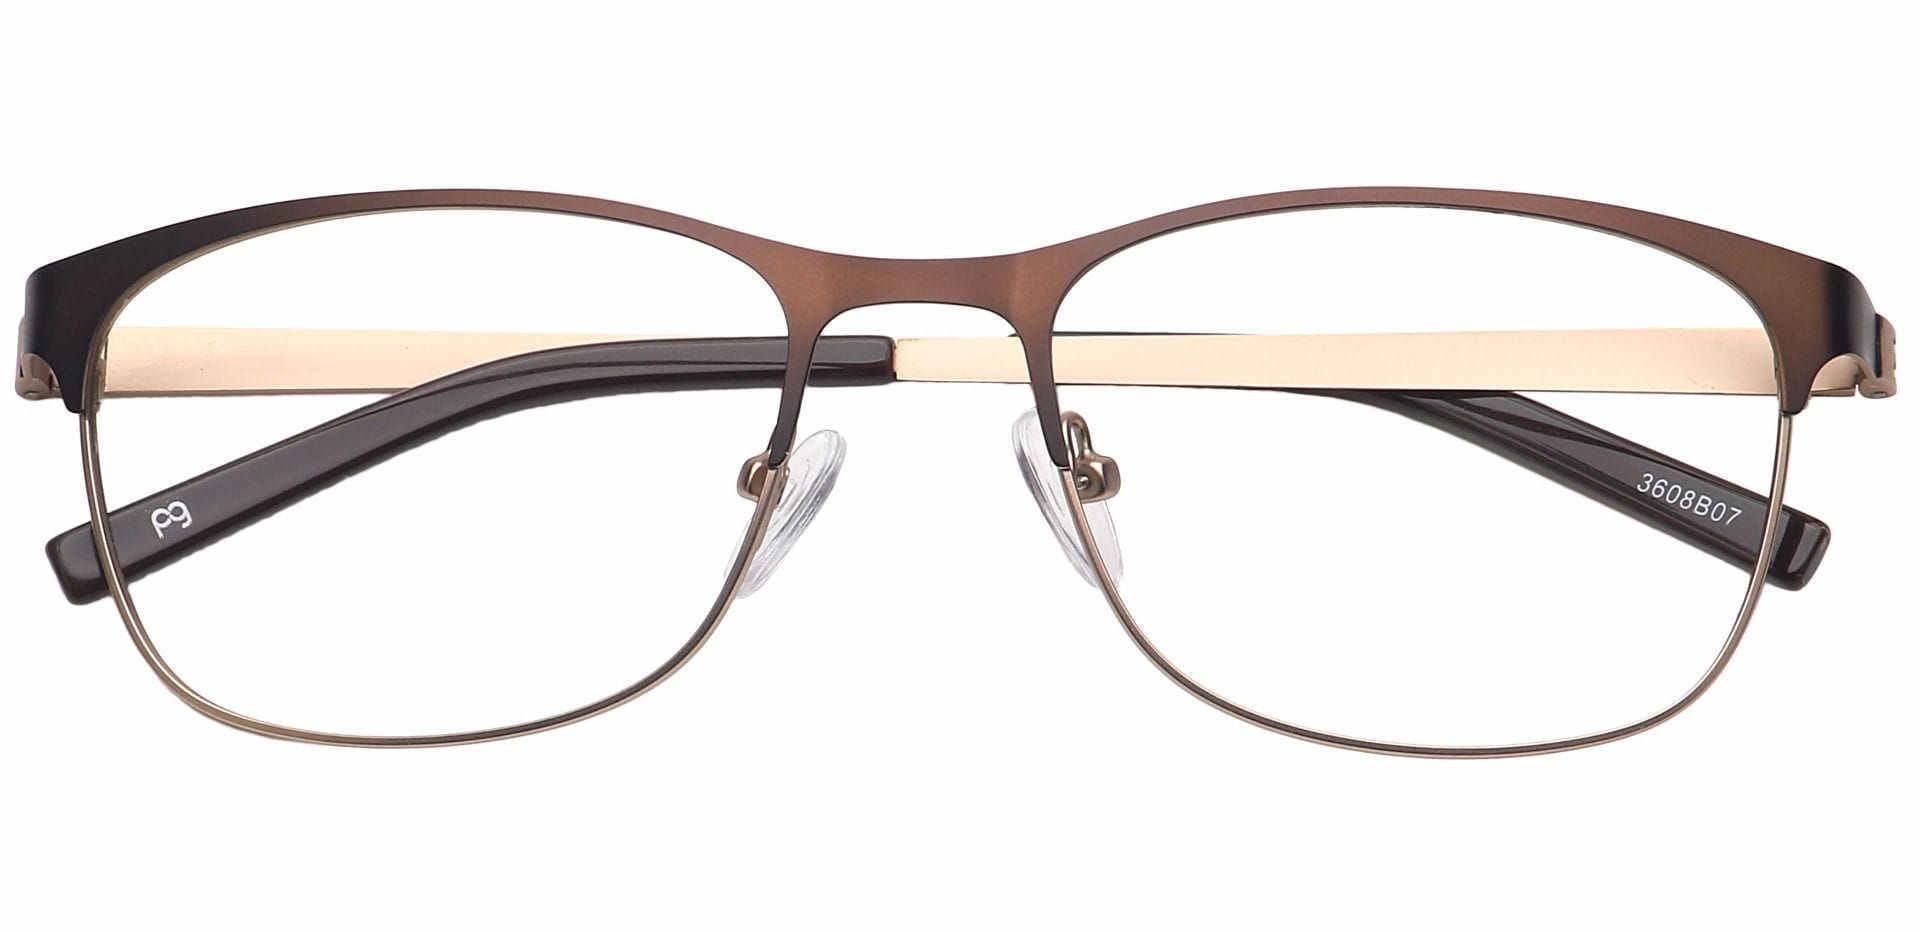 Tona Rectangle Reading Glasses - Brown